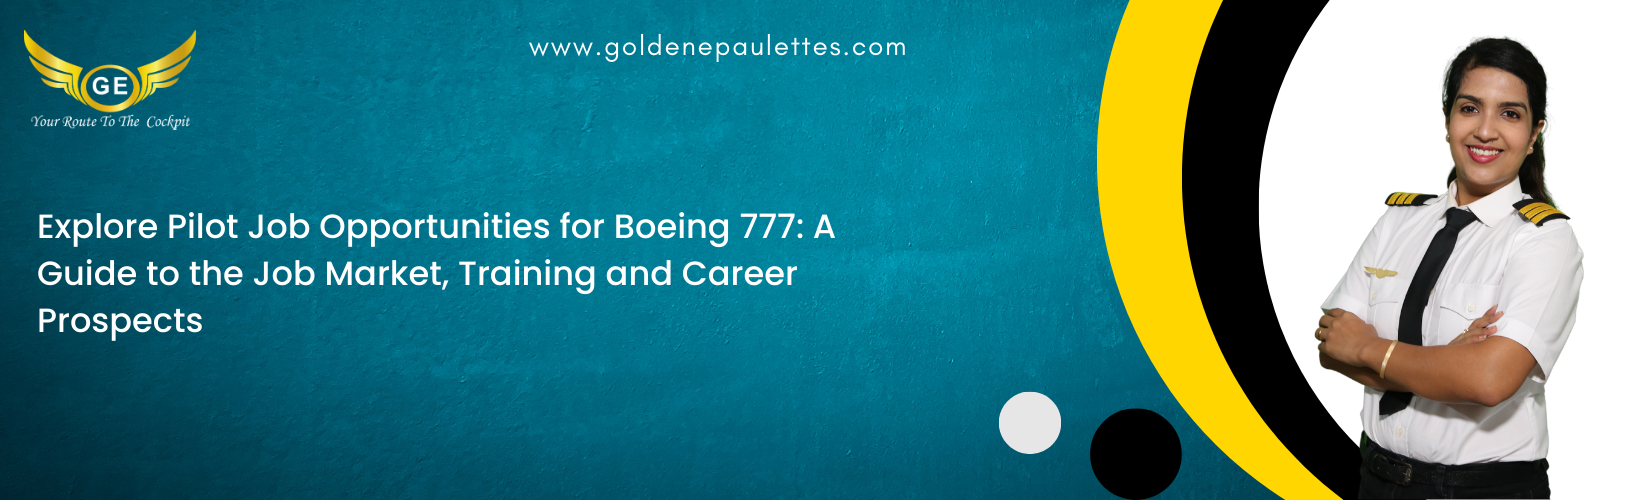 Boeing 777 Pilot Job Opportunities